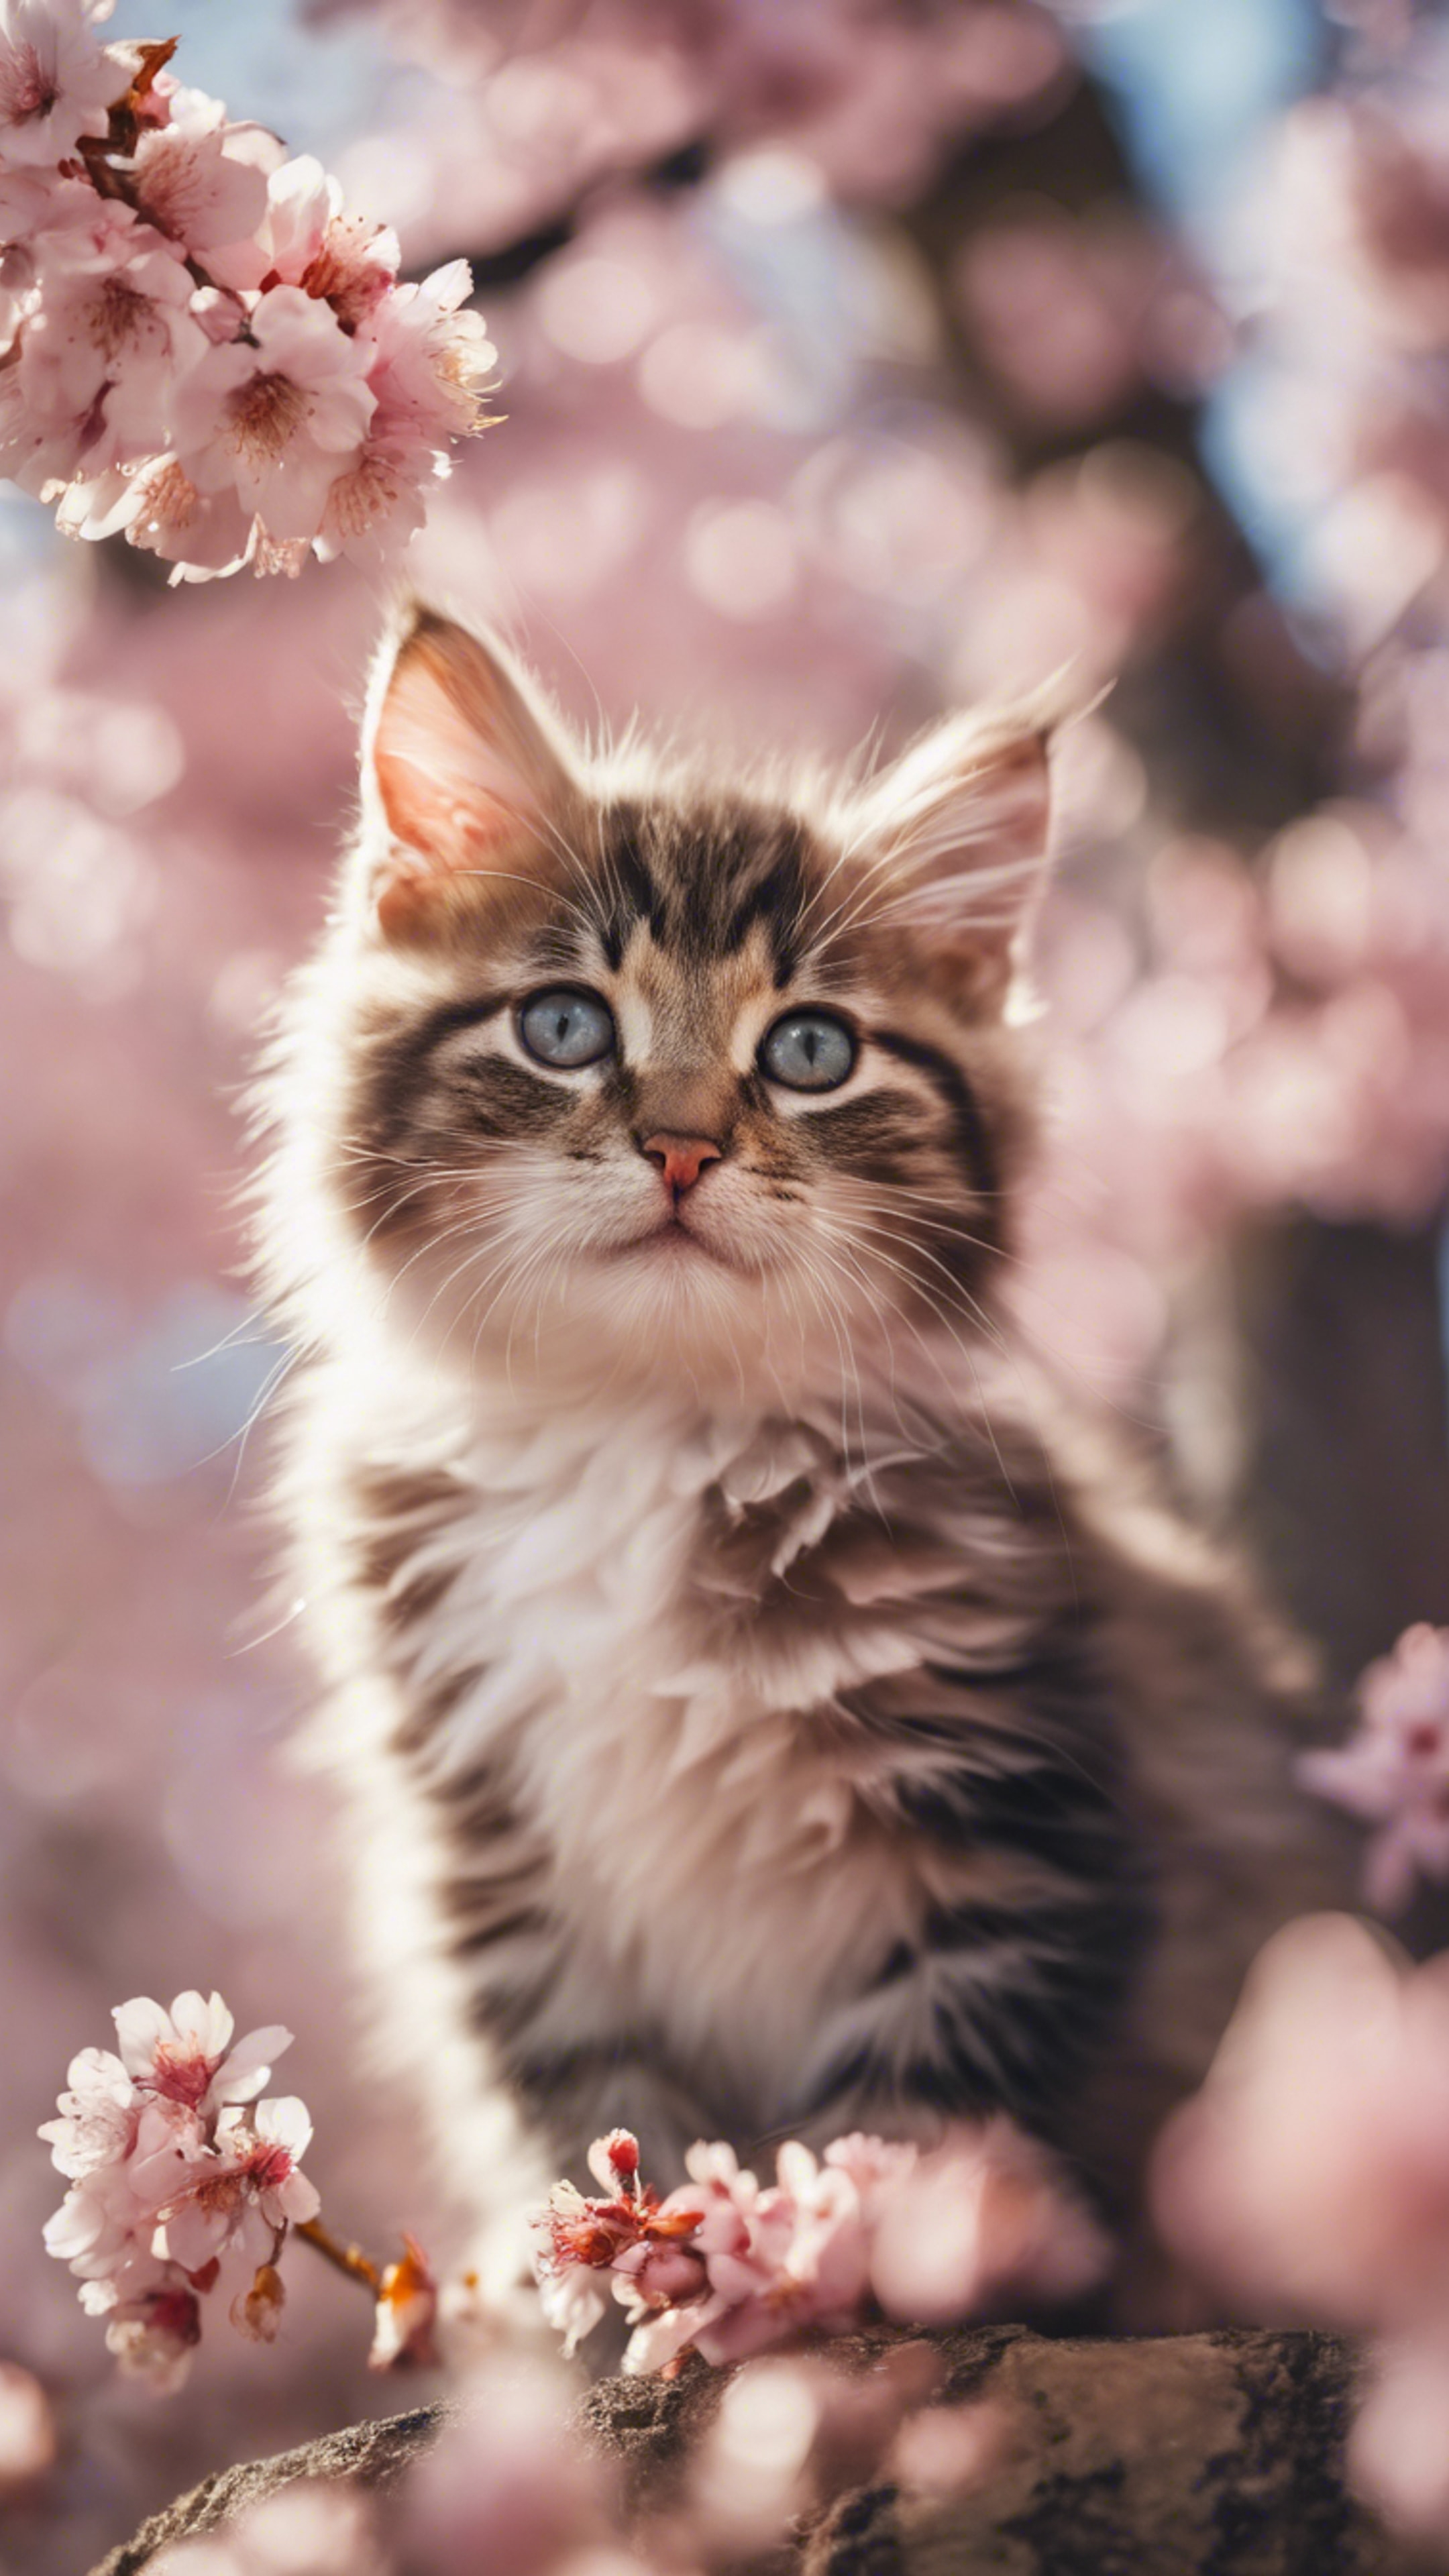 A cherry blossom tree in full bloom as the backdrop to a playful kitten in spring. duvar kağıdı[56e1c1b9132e46d98bd1]